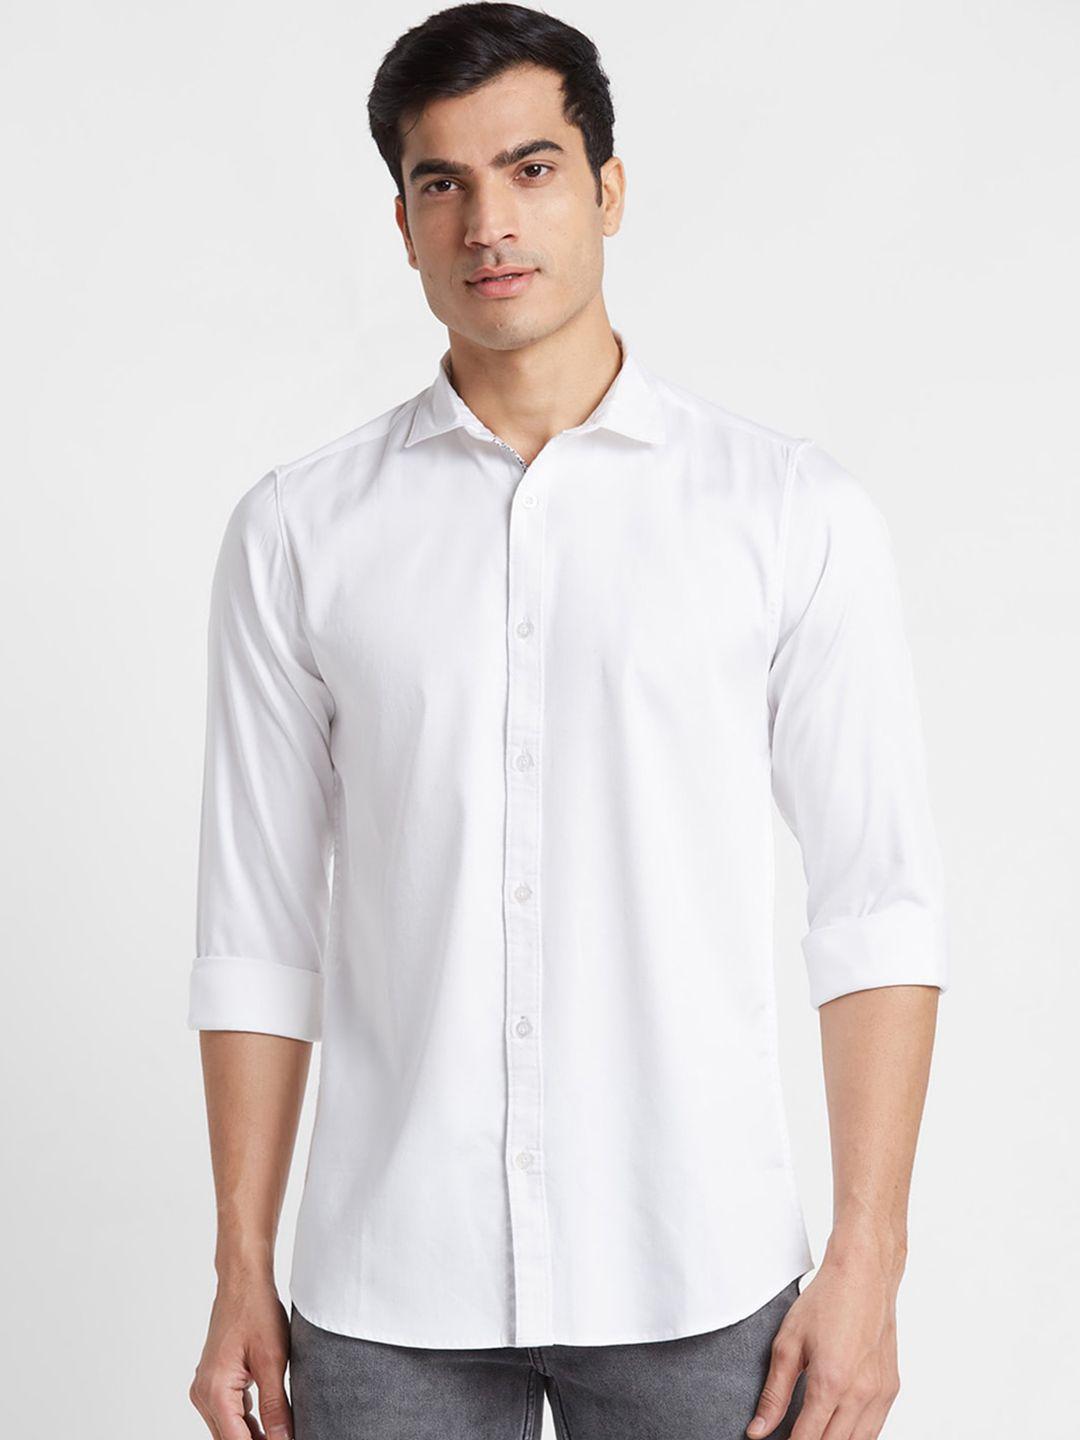 globus original pure cotton casual shirt